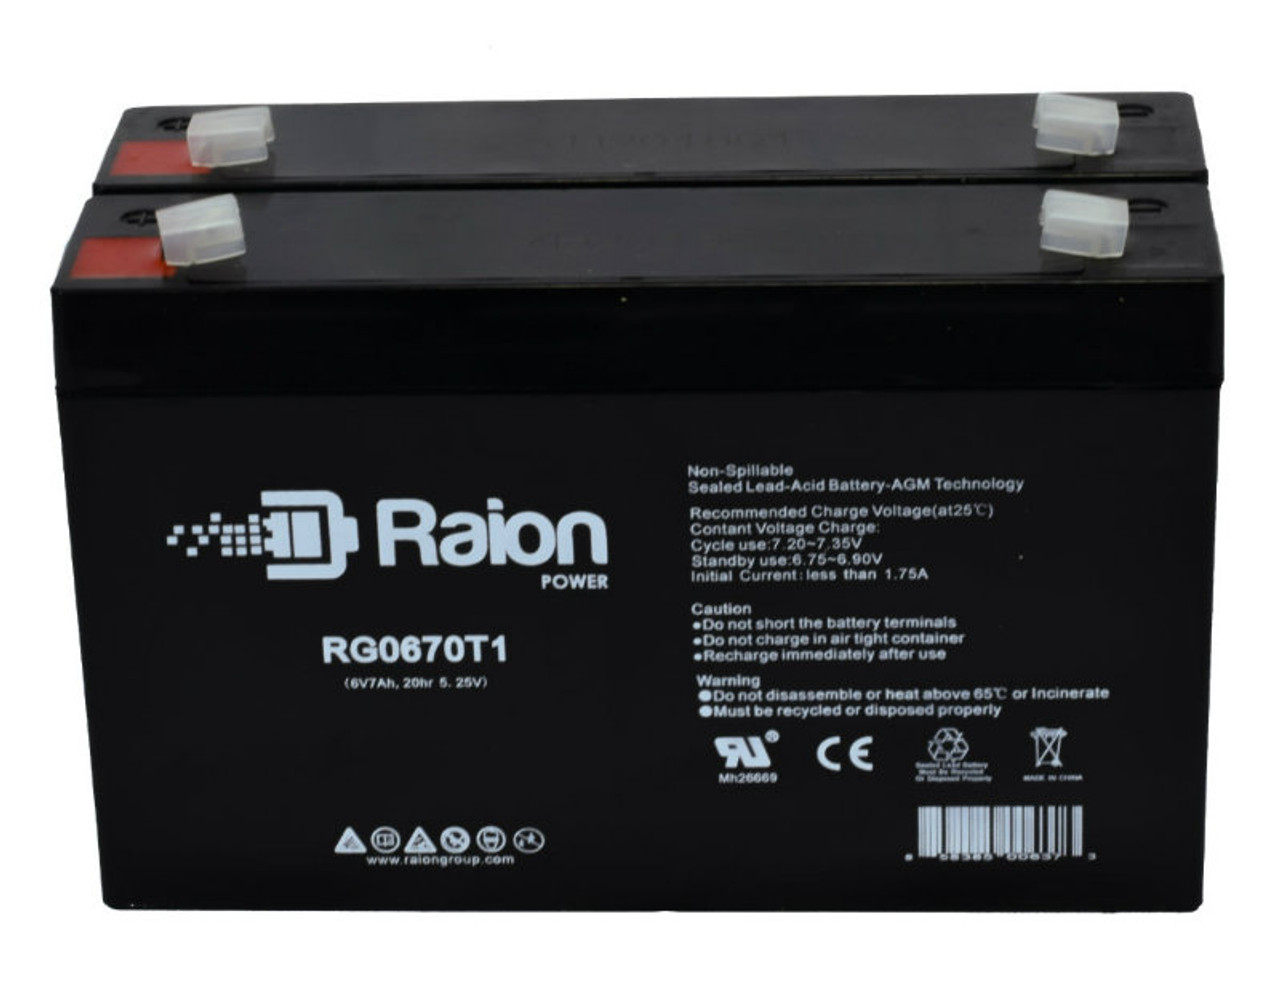 Raion Power RG0670T1 6V 7Ah Replacement Battery for IMED Gemini PC-1-Model 1310 - 2 Pack